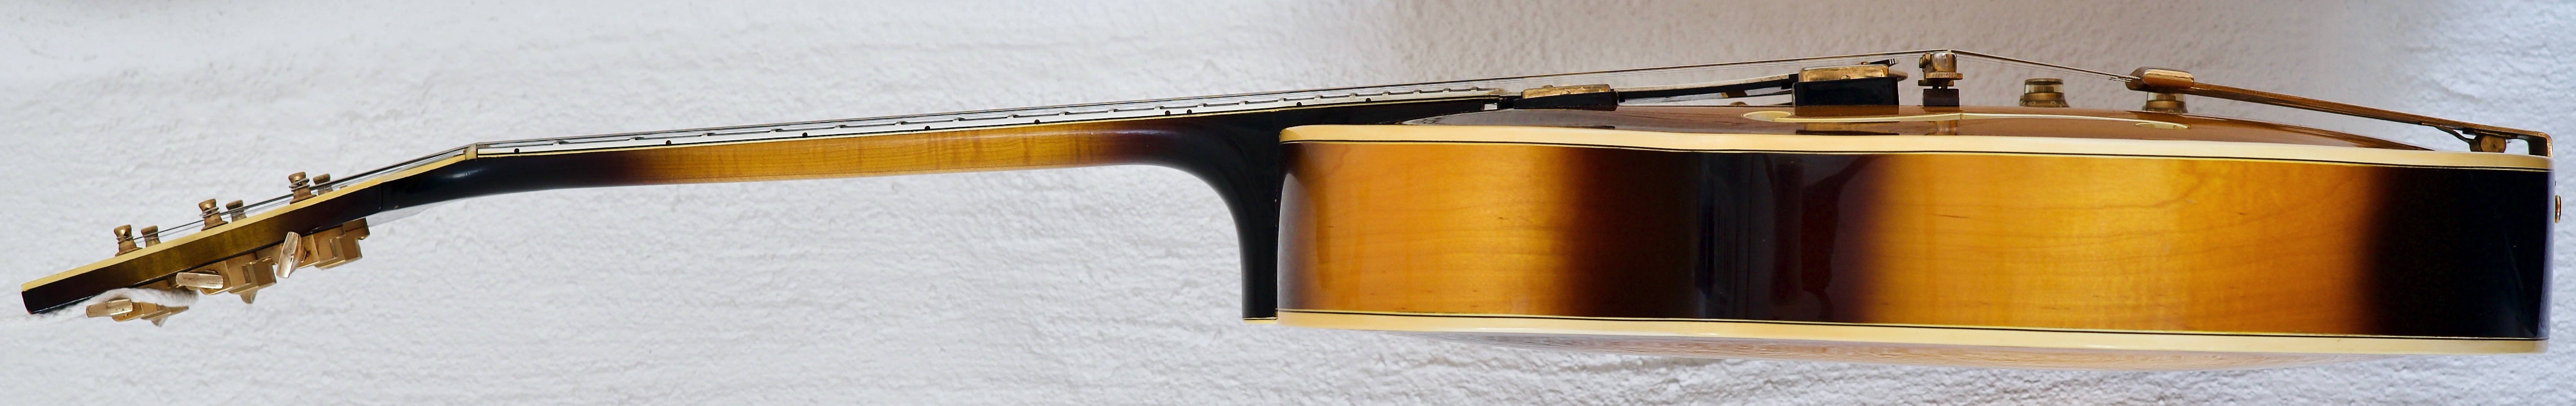 1967 Gibson Super 400 CES